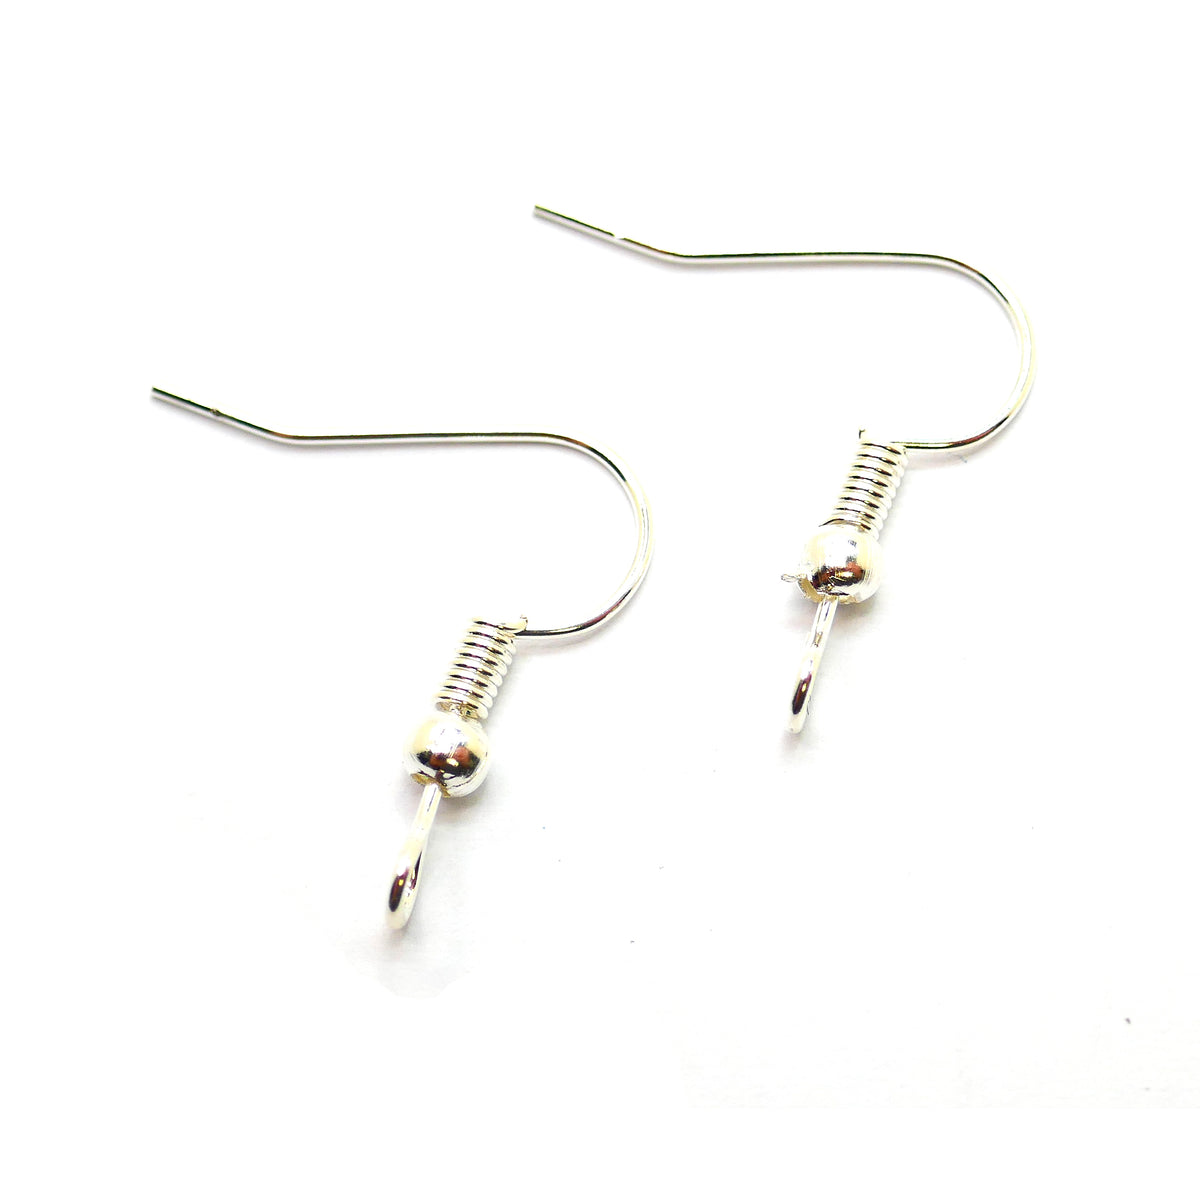 Solid 925 Sterling Silver French Fishhook Ball Earrings Hook Ear wires  Findings